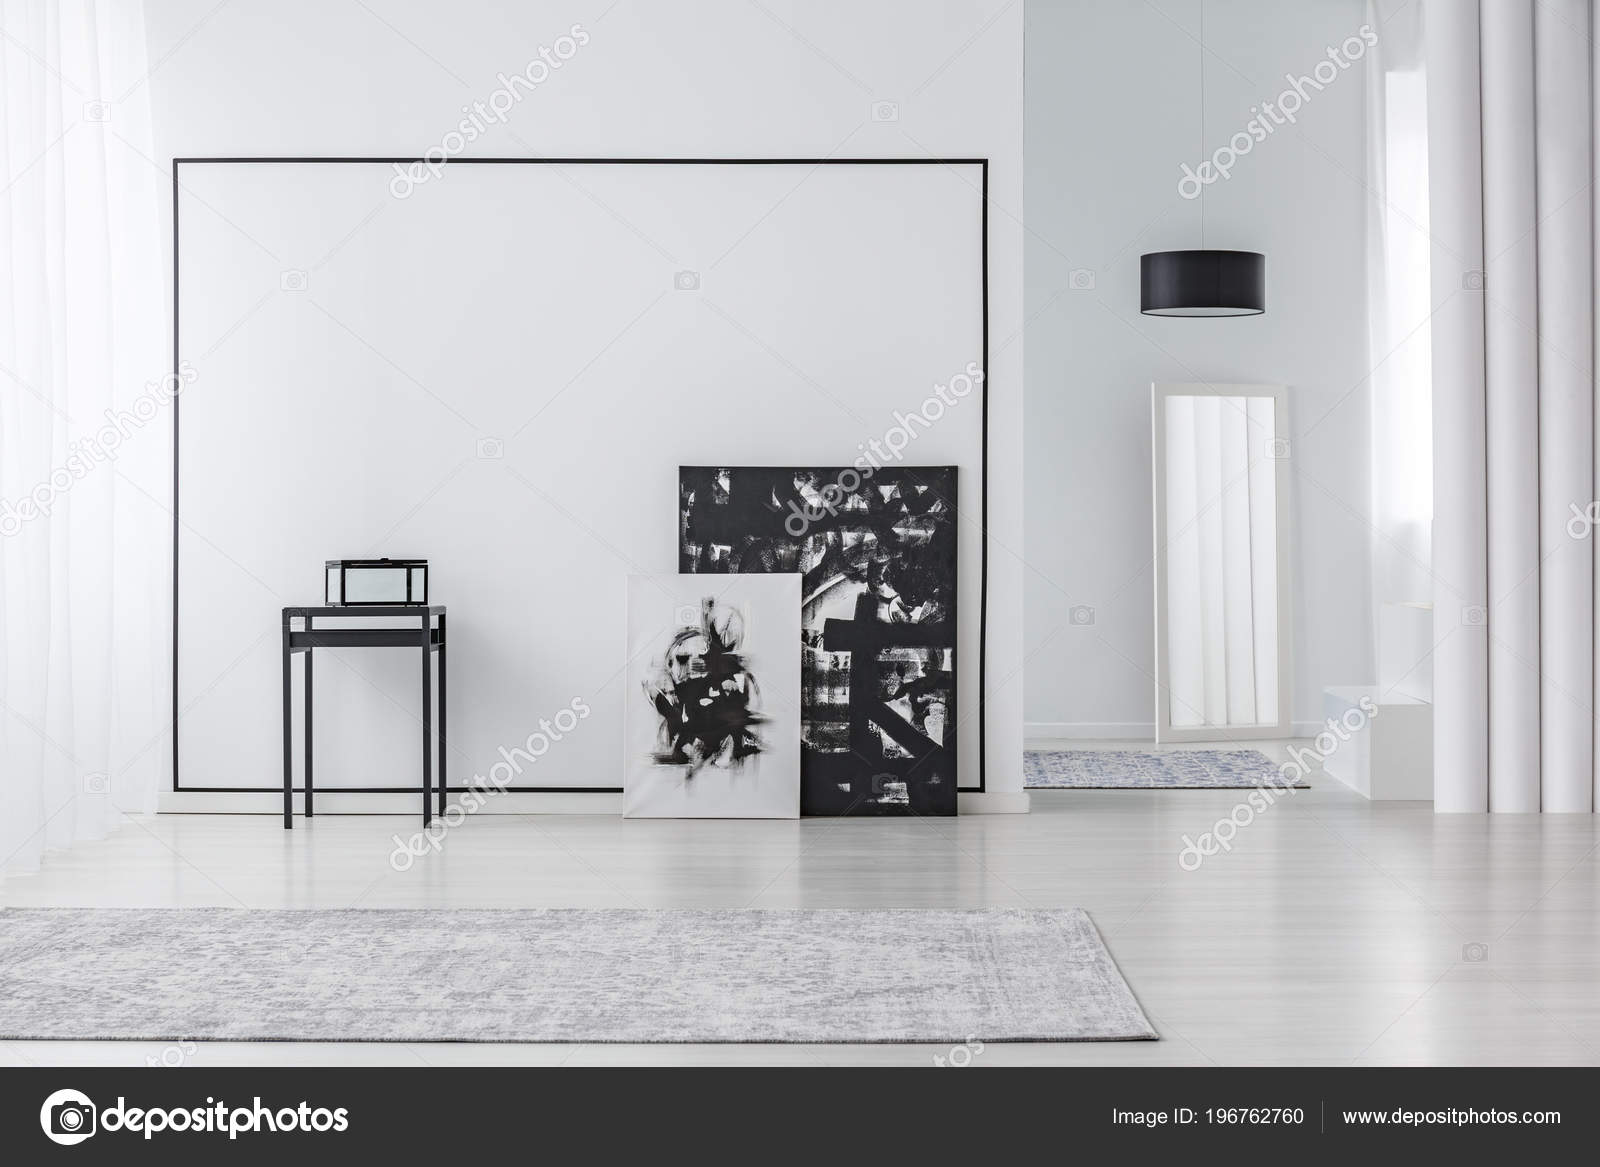 Simple Black And White Paintings Black White Painting Minimal Living Room Interior Grey Carpet Mirror Stock Photo C Photographee Eu 196762760